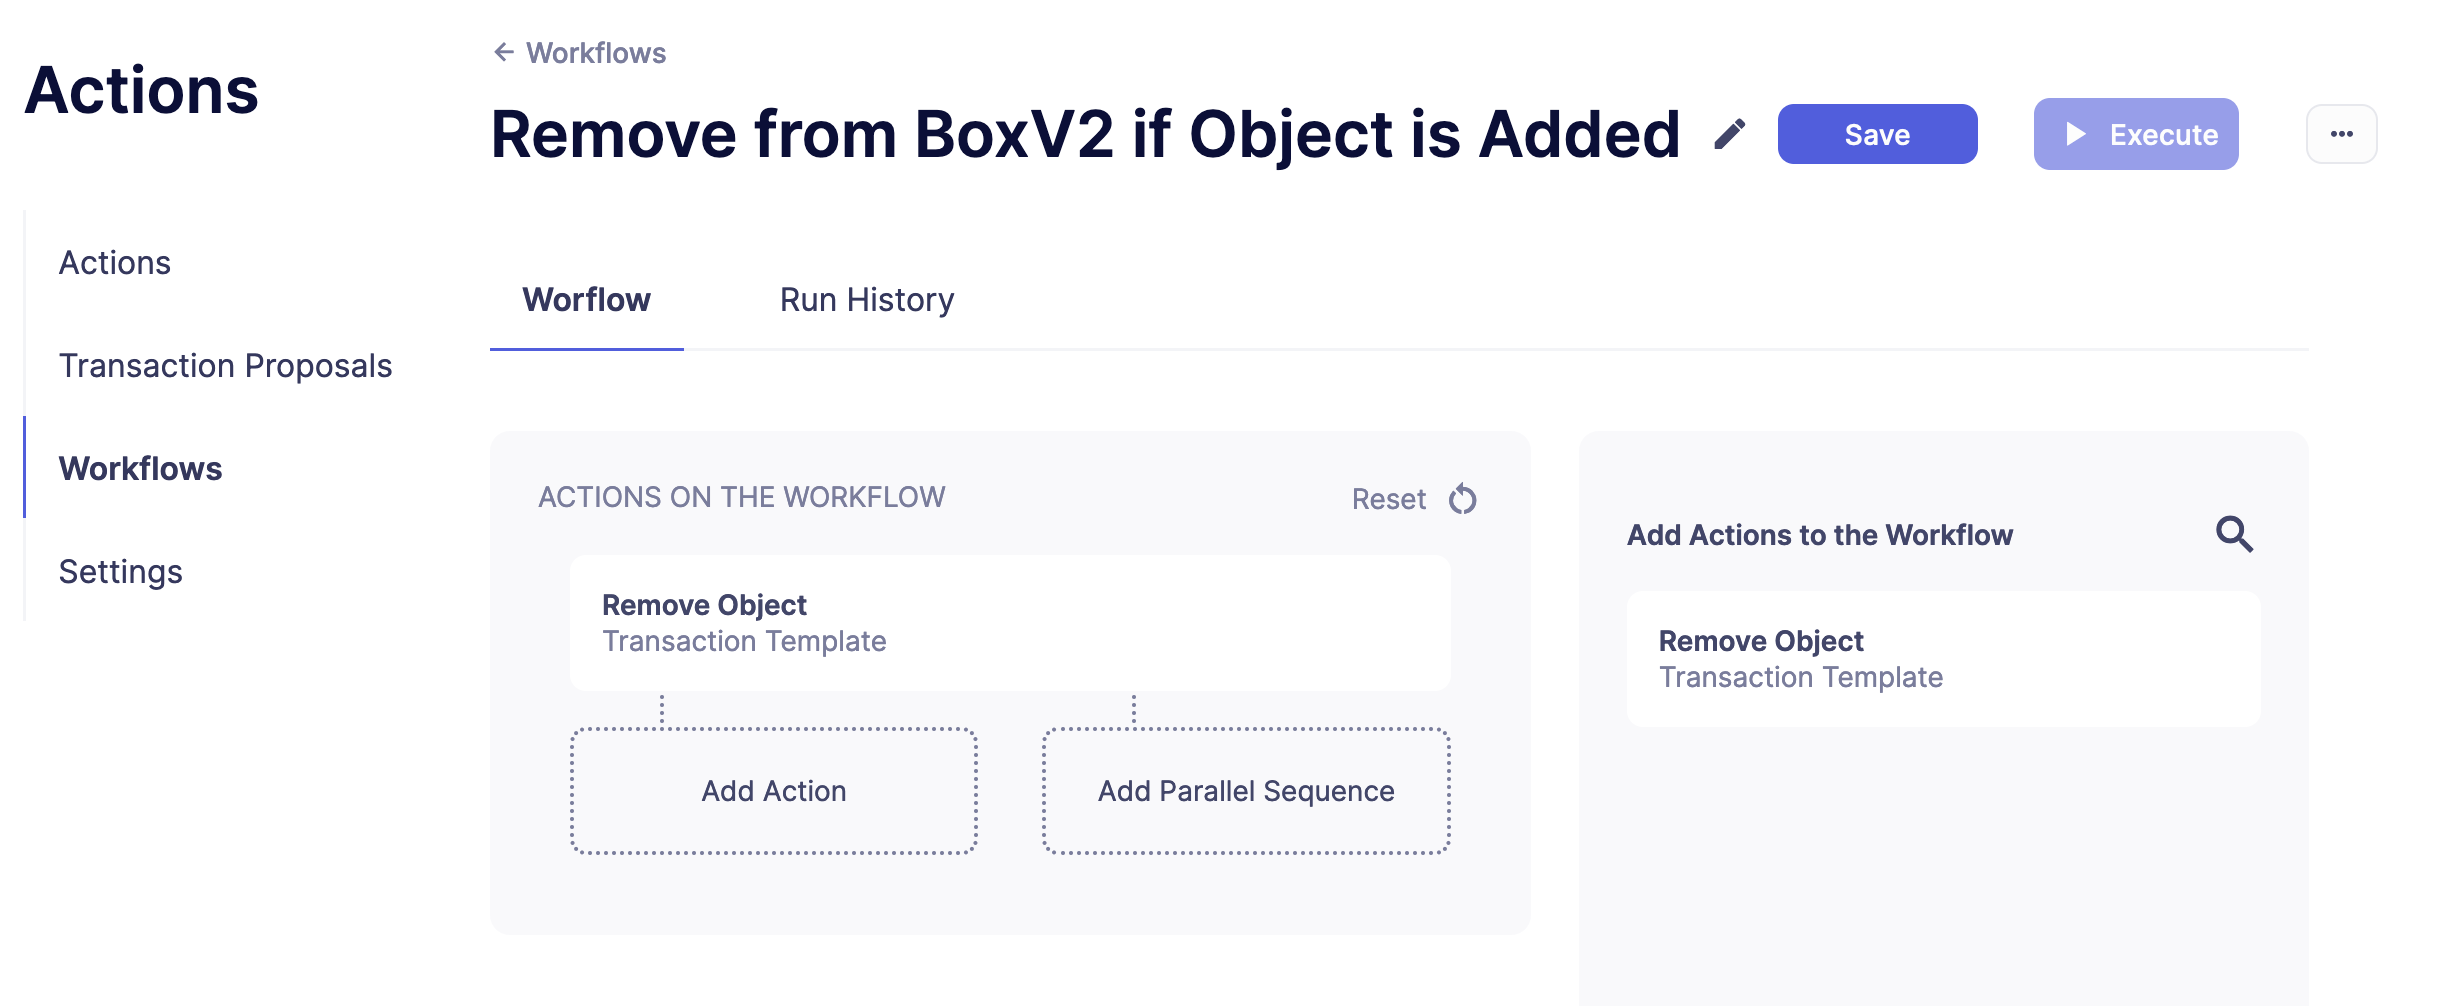 BoxV2 workflow